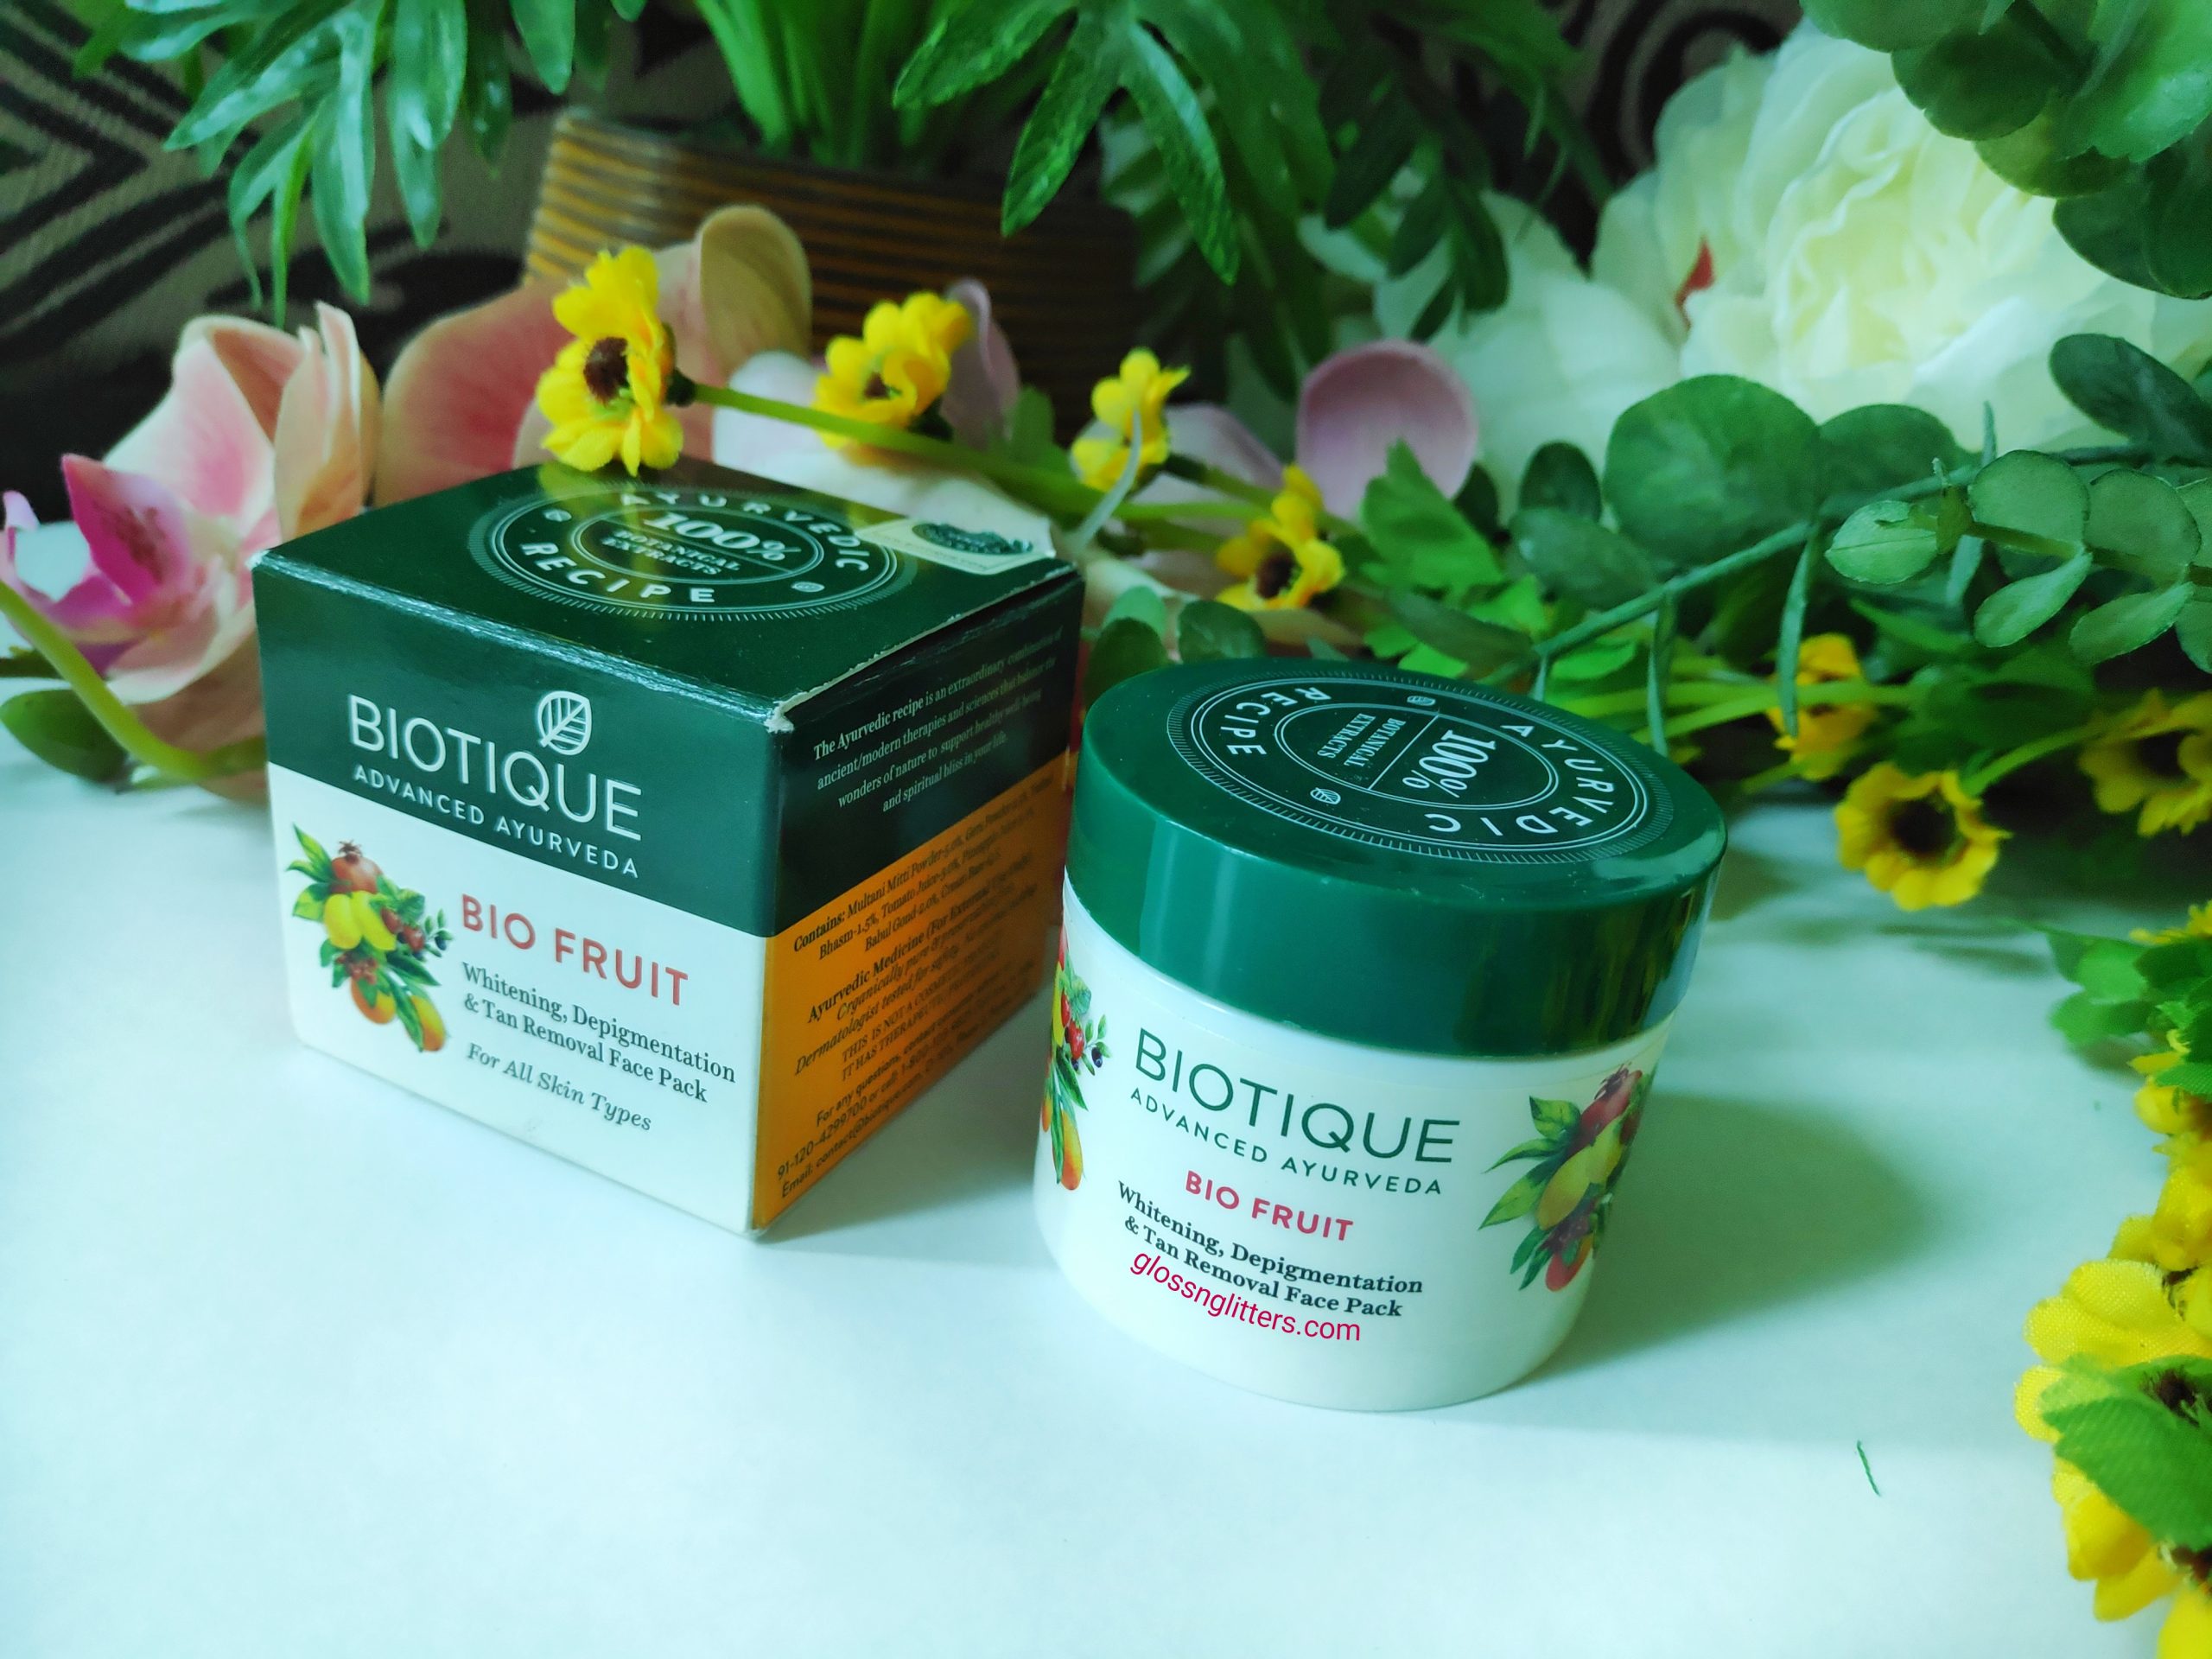 Biotique Bio Fruit Whitening Depigmentation & Tan Removal Face Pack